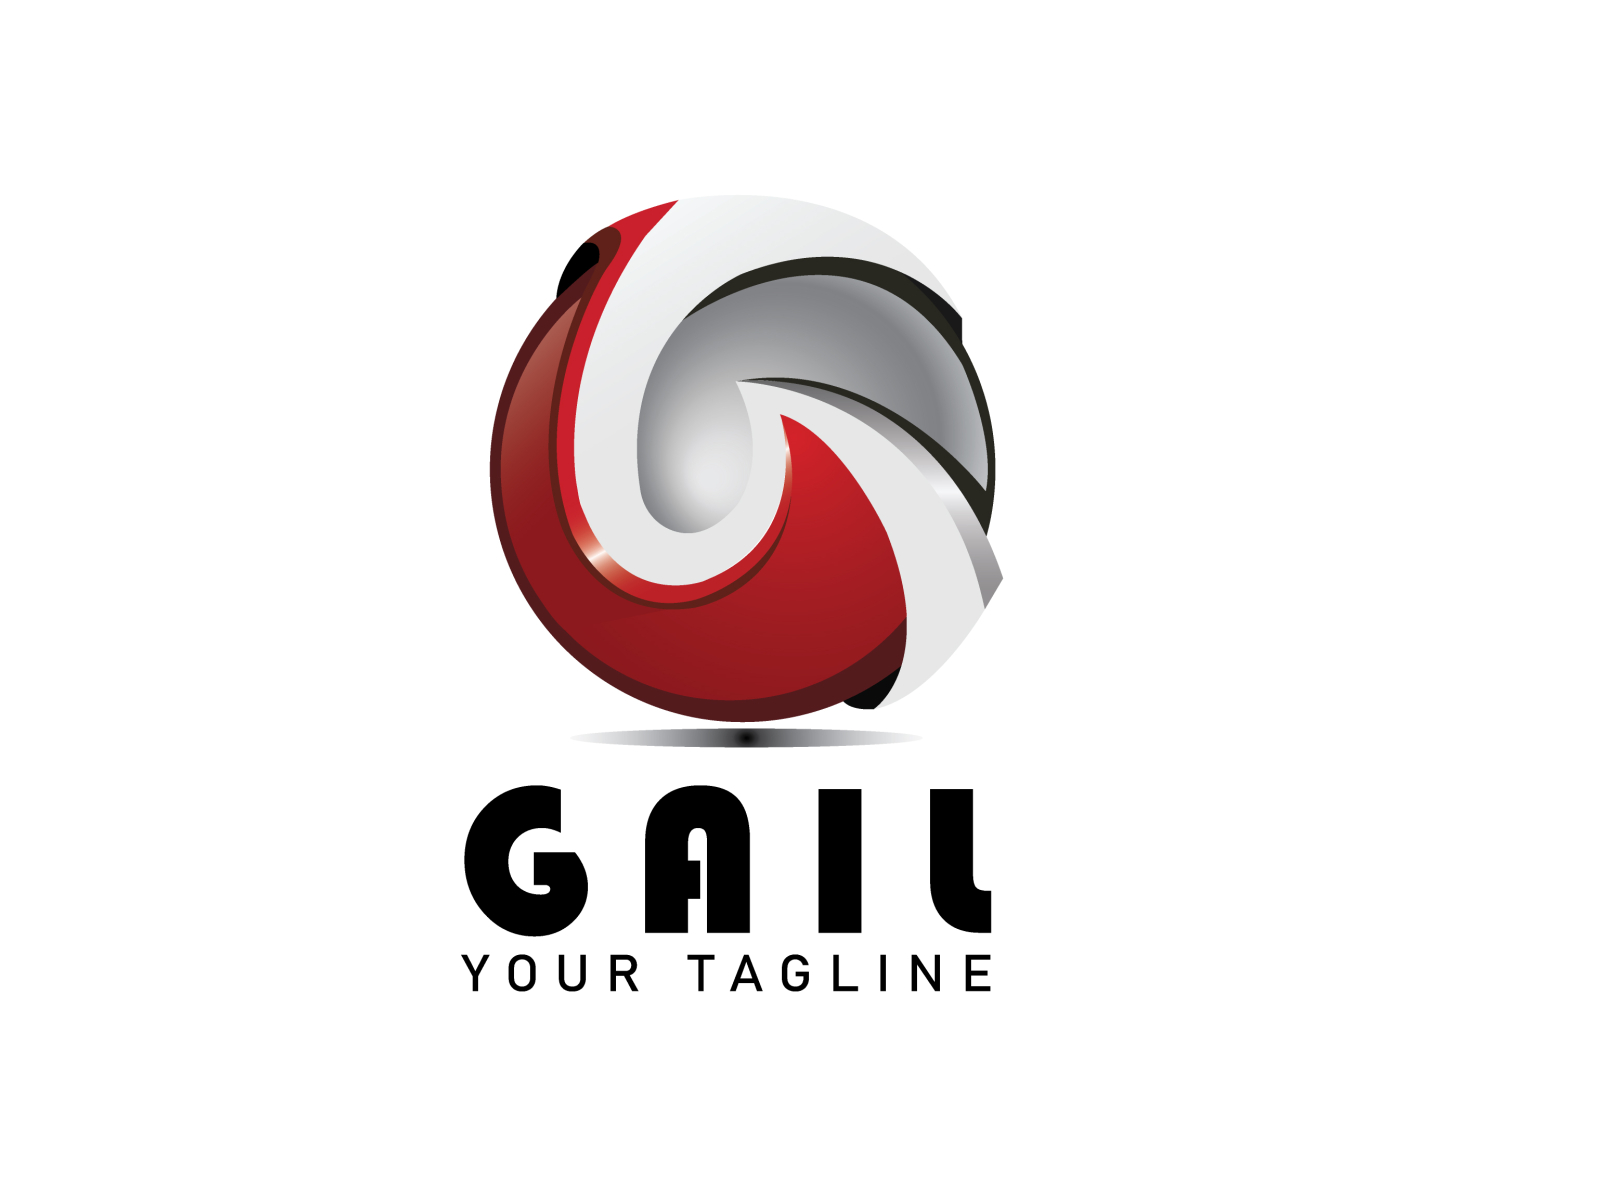 GAIL (India) Recruitment 2016 for 233 Posts in E-1, S-7, S-5 & S-3 grades  gailonline.com